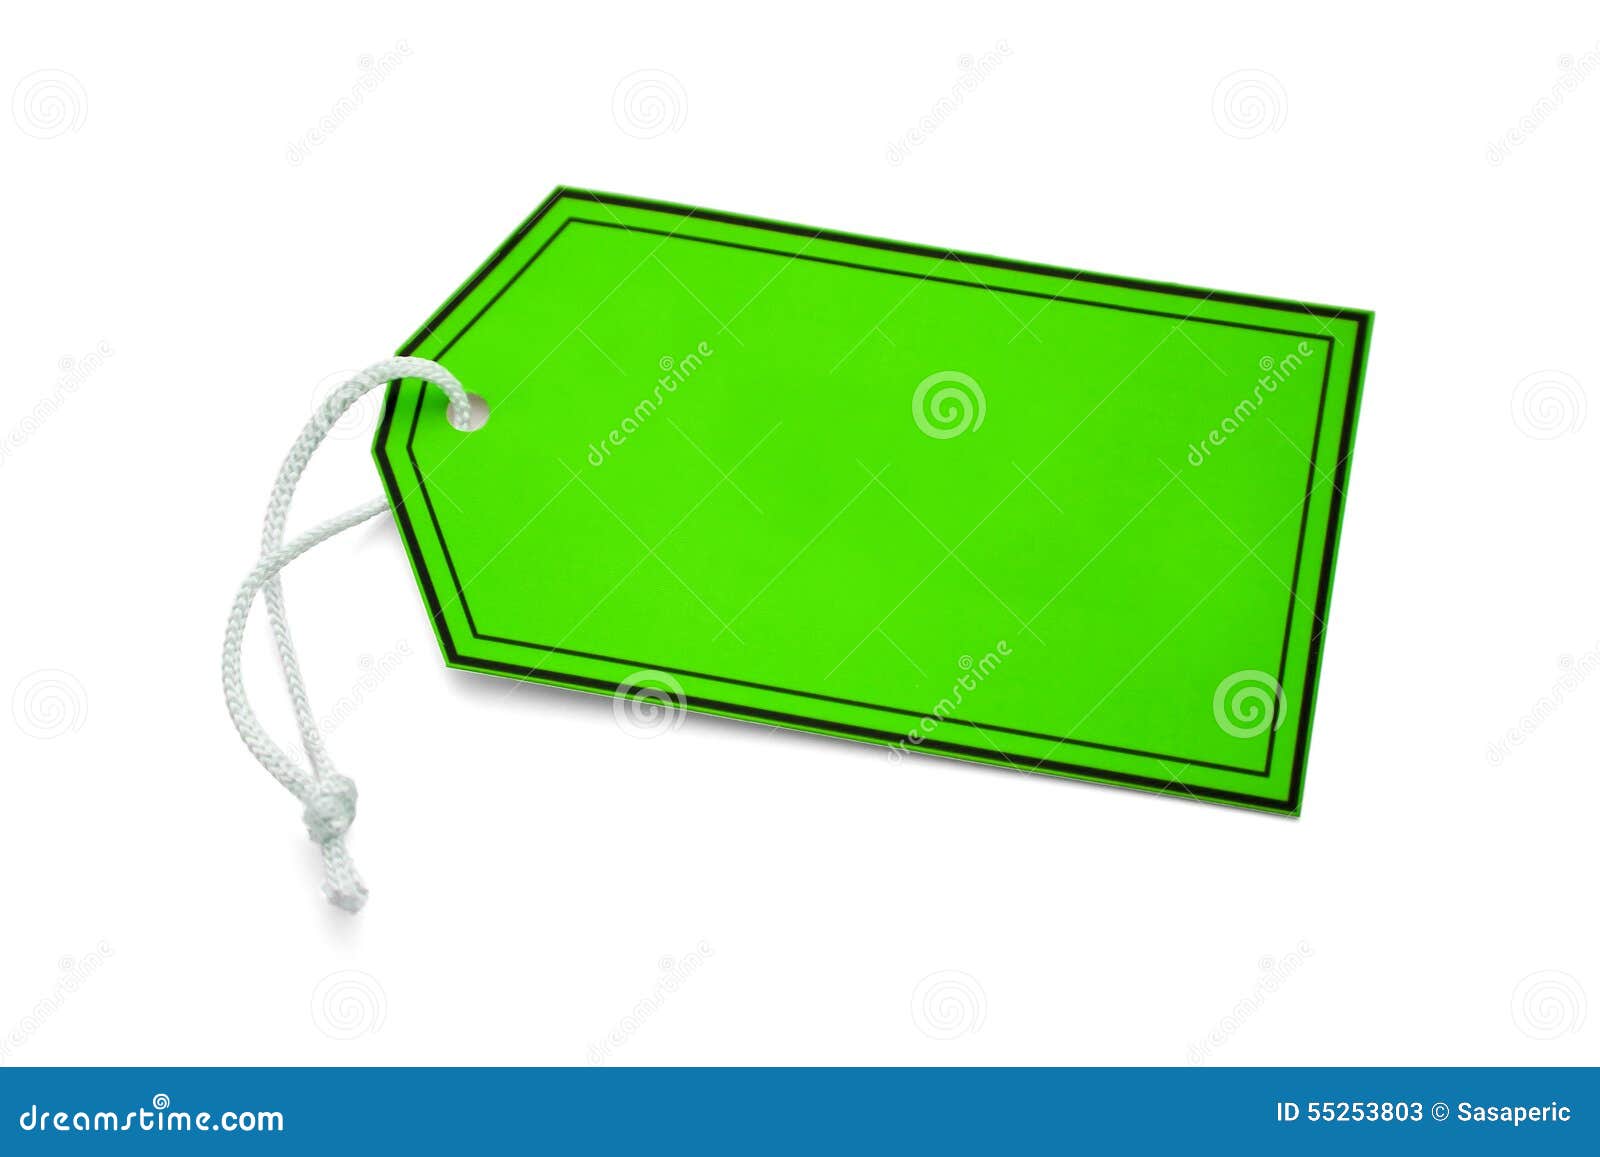 Green tab hanger stock image. Image of trade, cord, fabric - 55253803